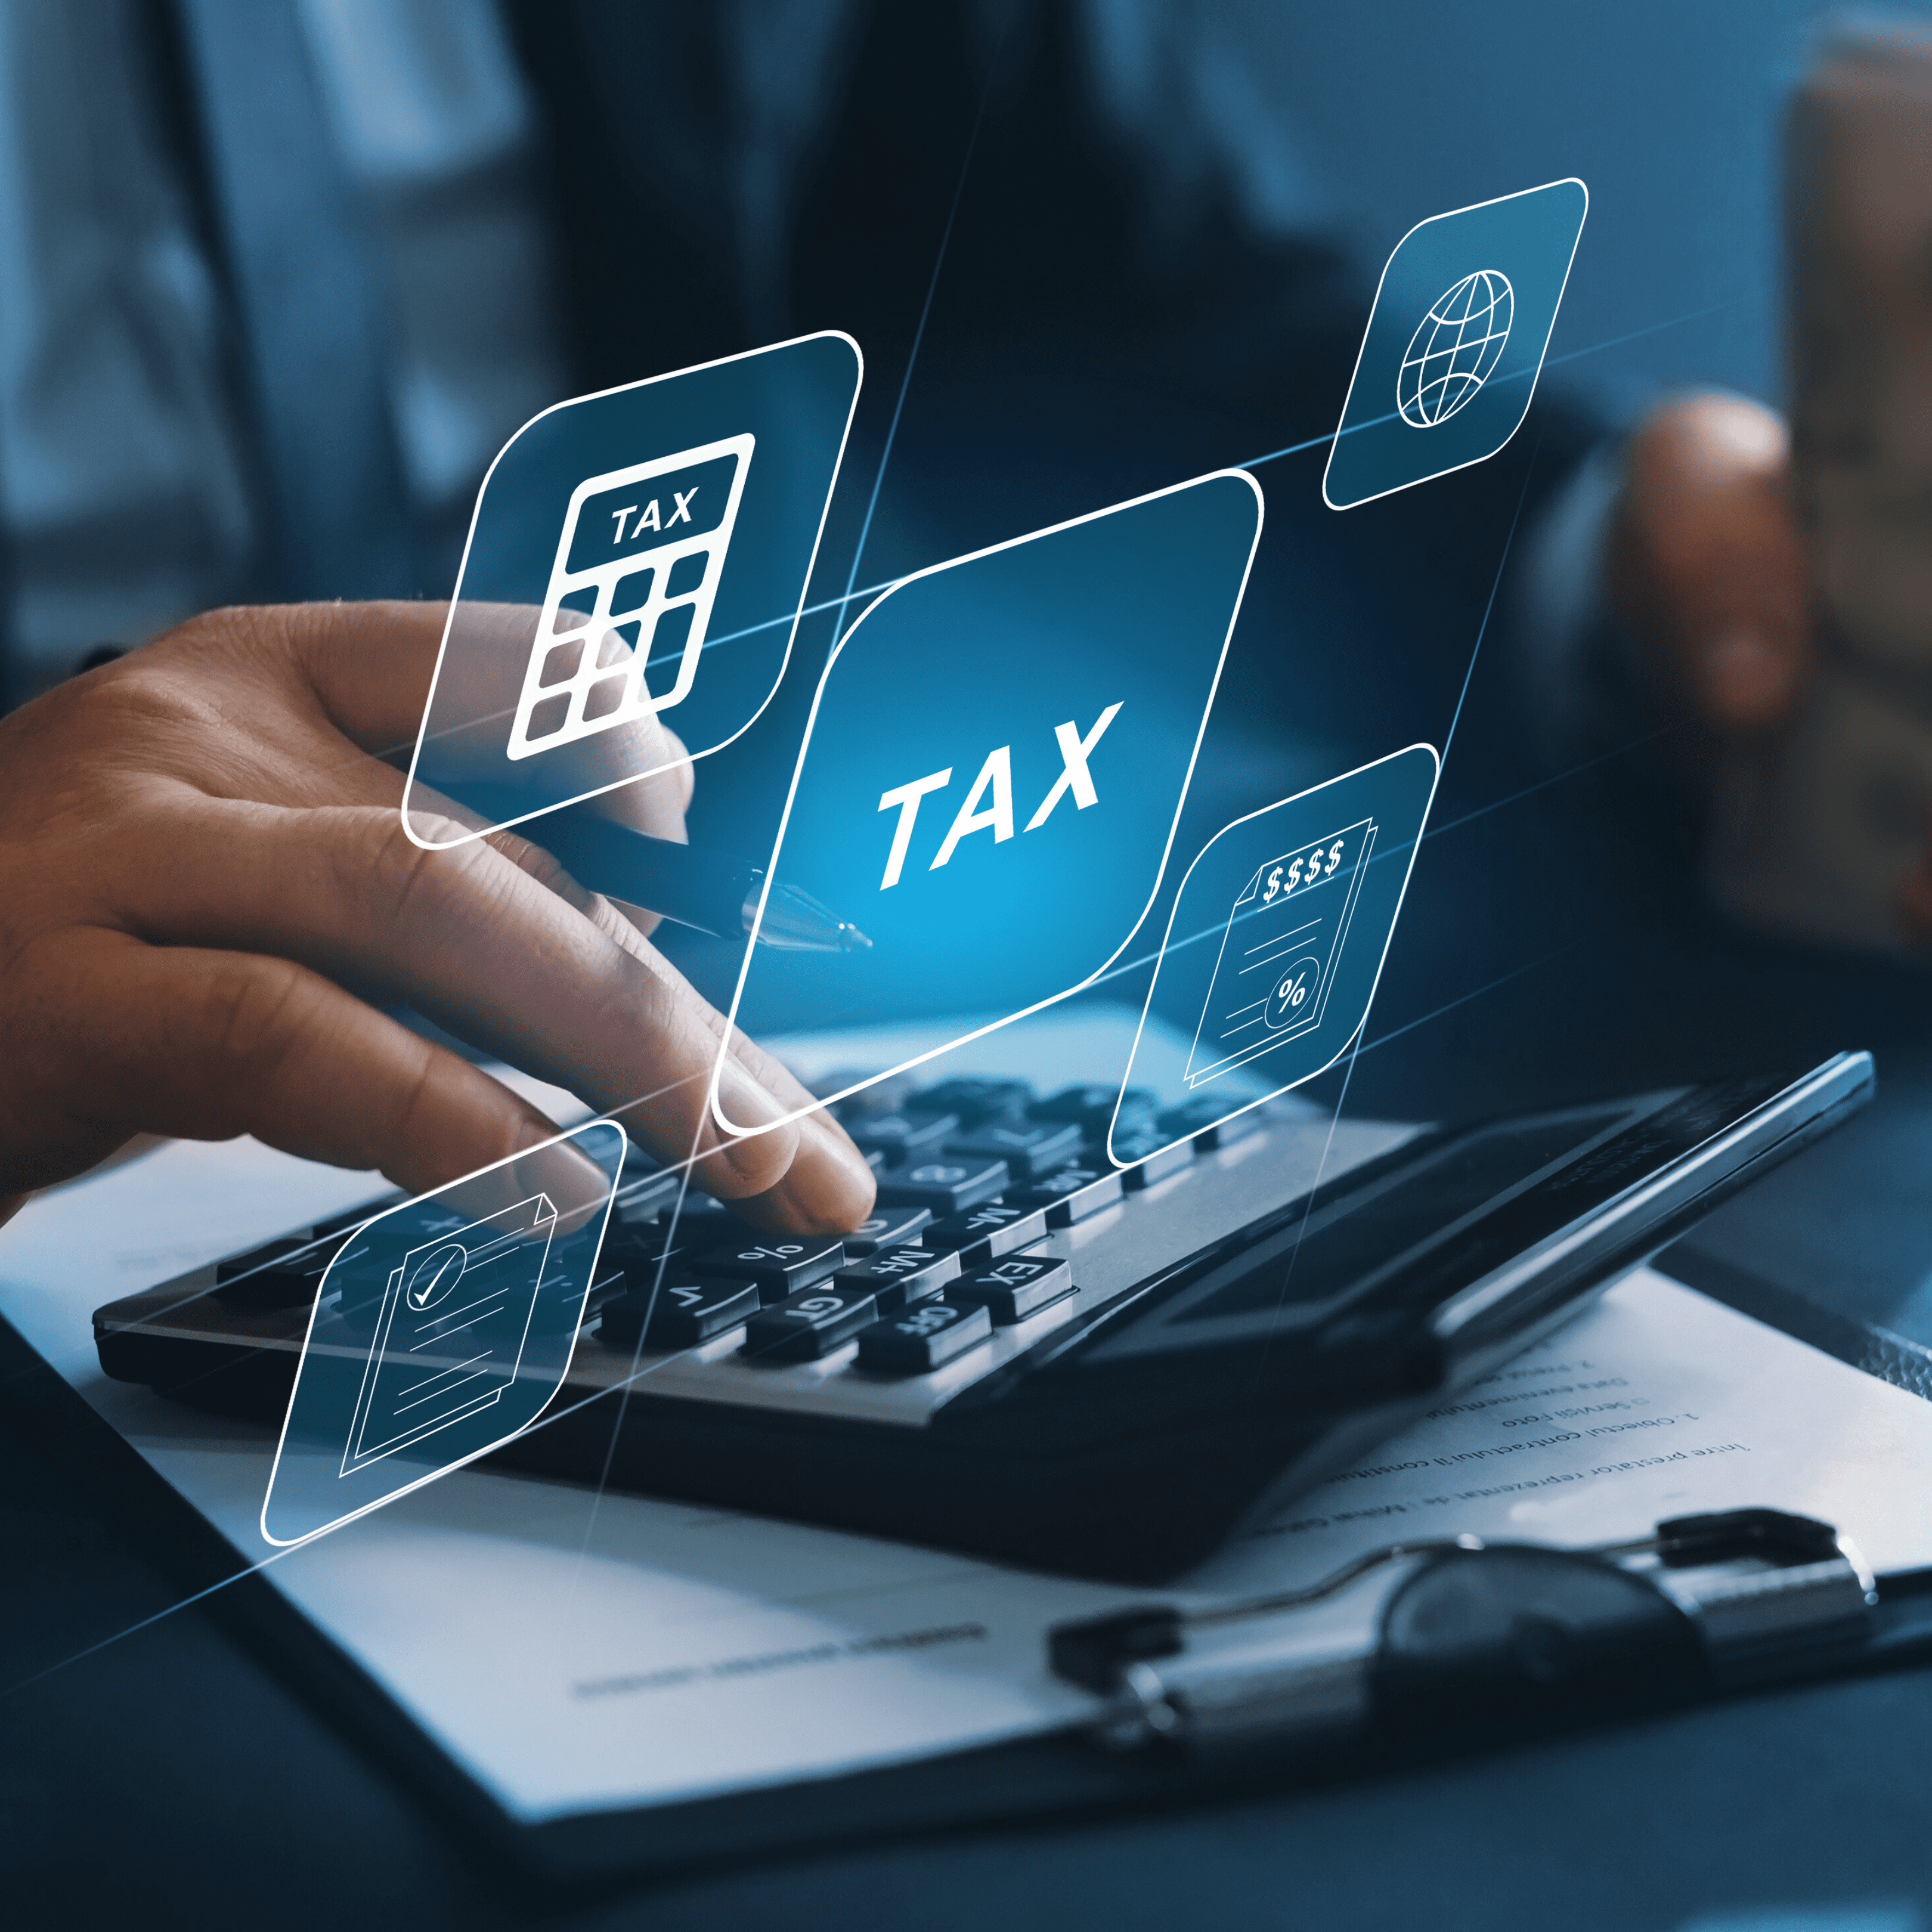 Corporate Tax in UAE - Corporate Tax Services